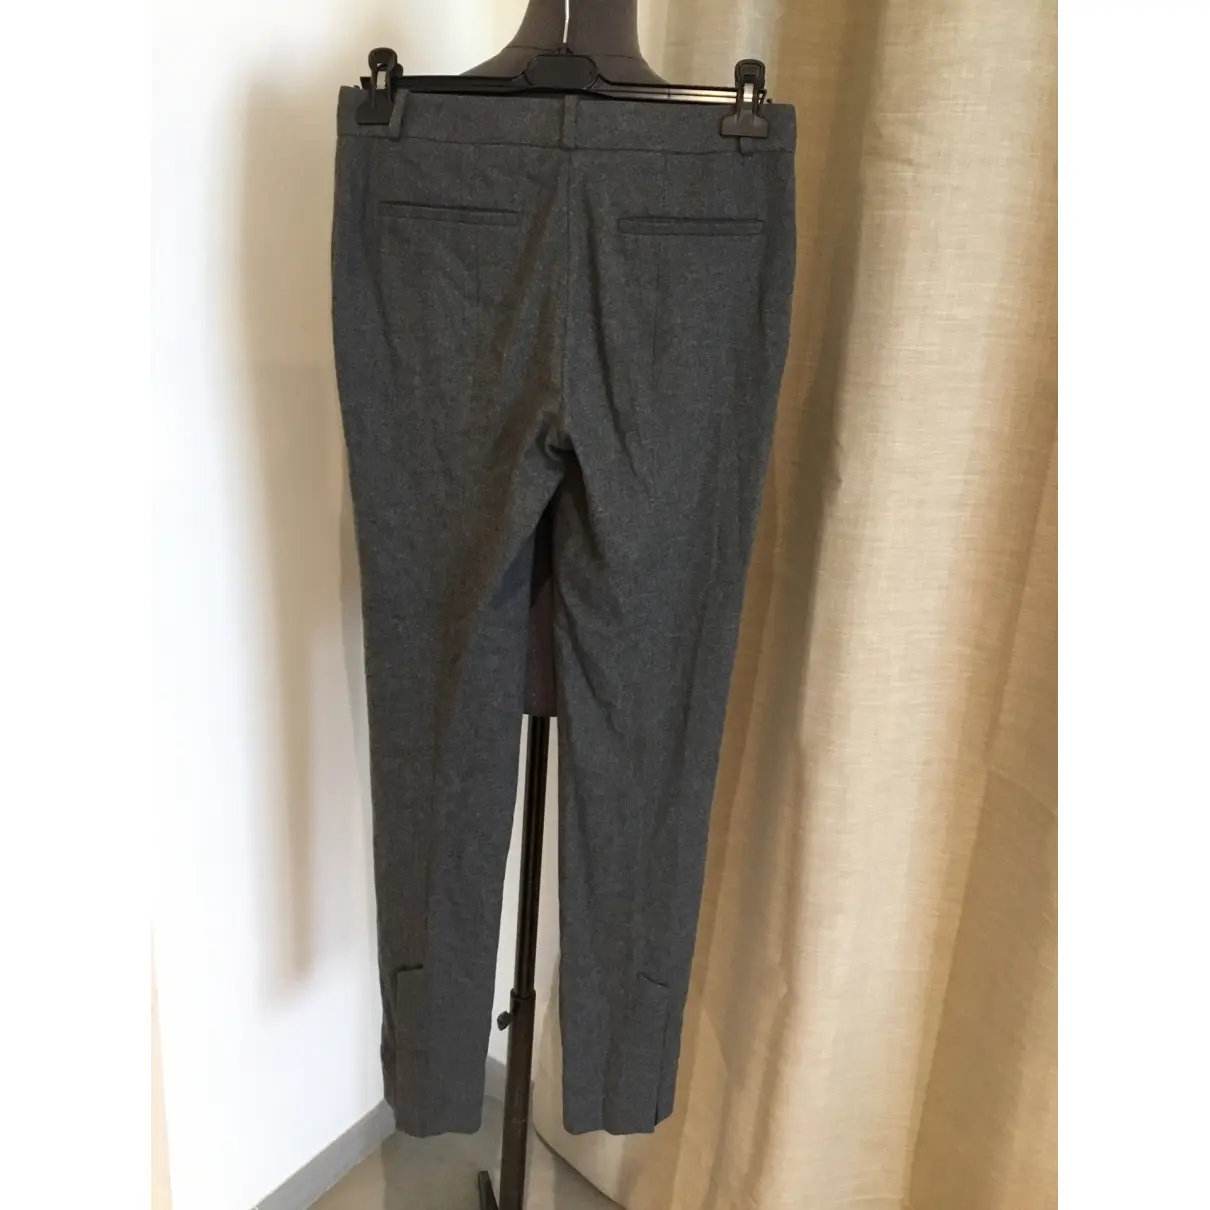 Buy Diane Von Furstenberg Carot pants online